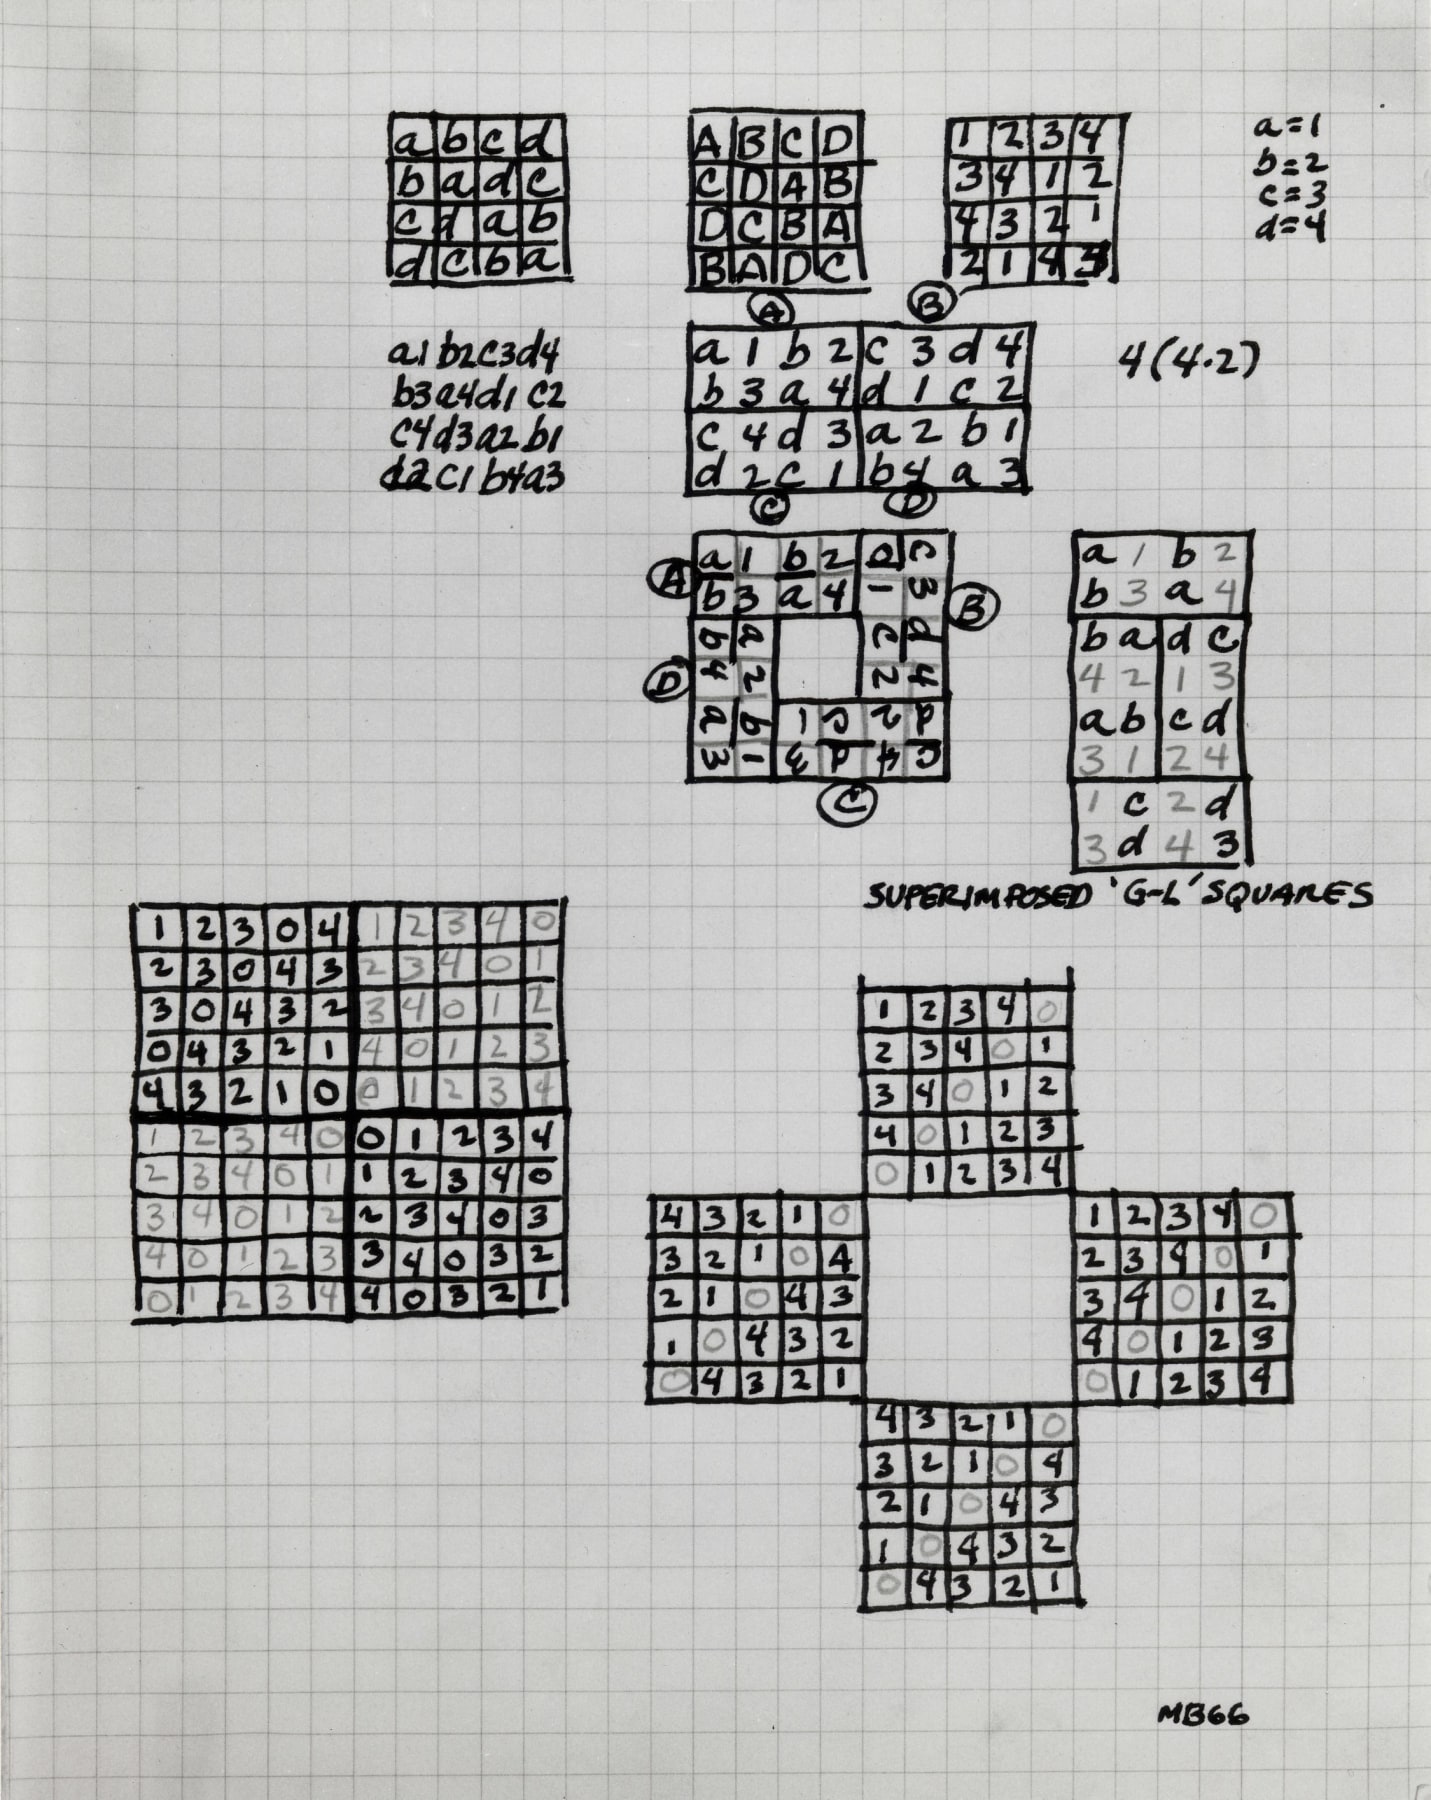 Mel Bochner,&nbsp;Superimposed &#039;G-L&#039; Squares, 1966.